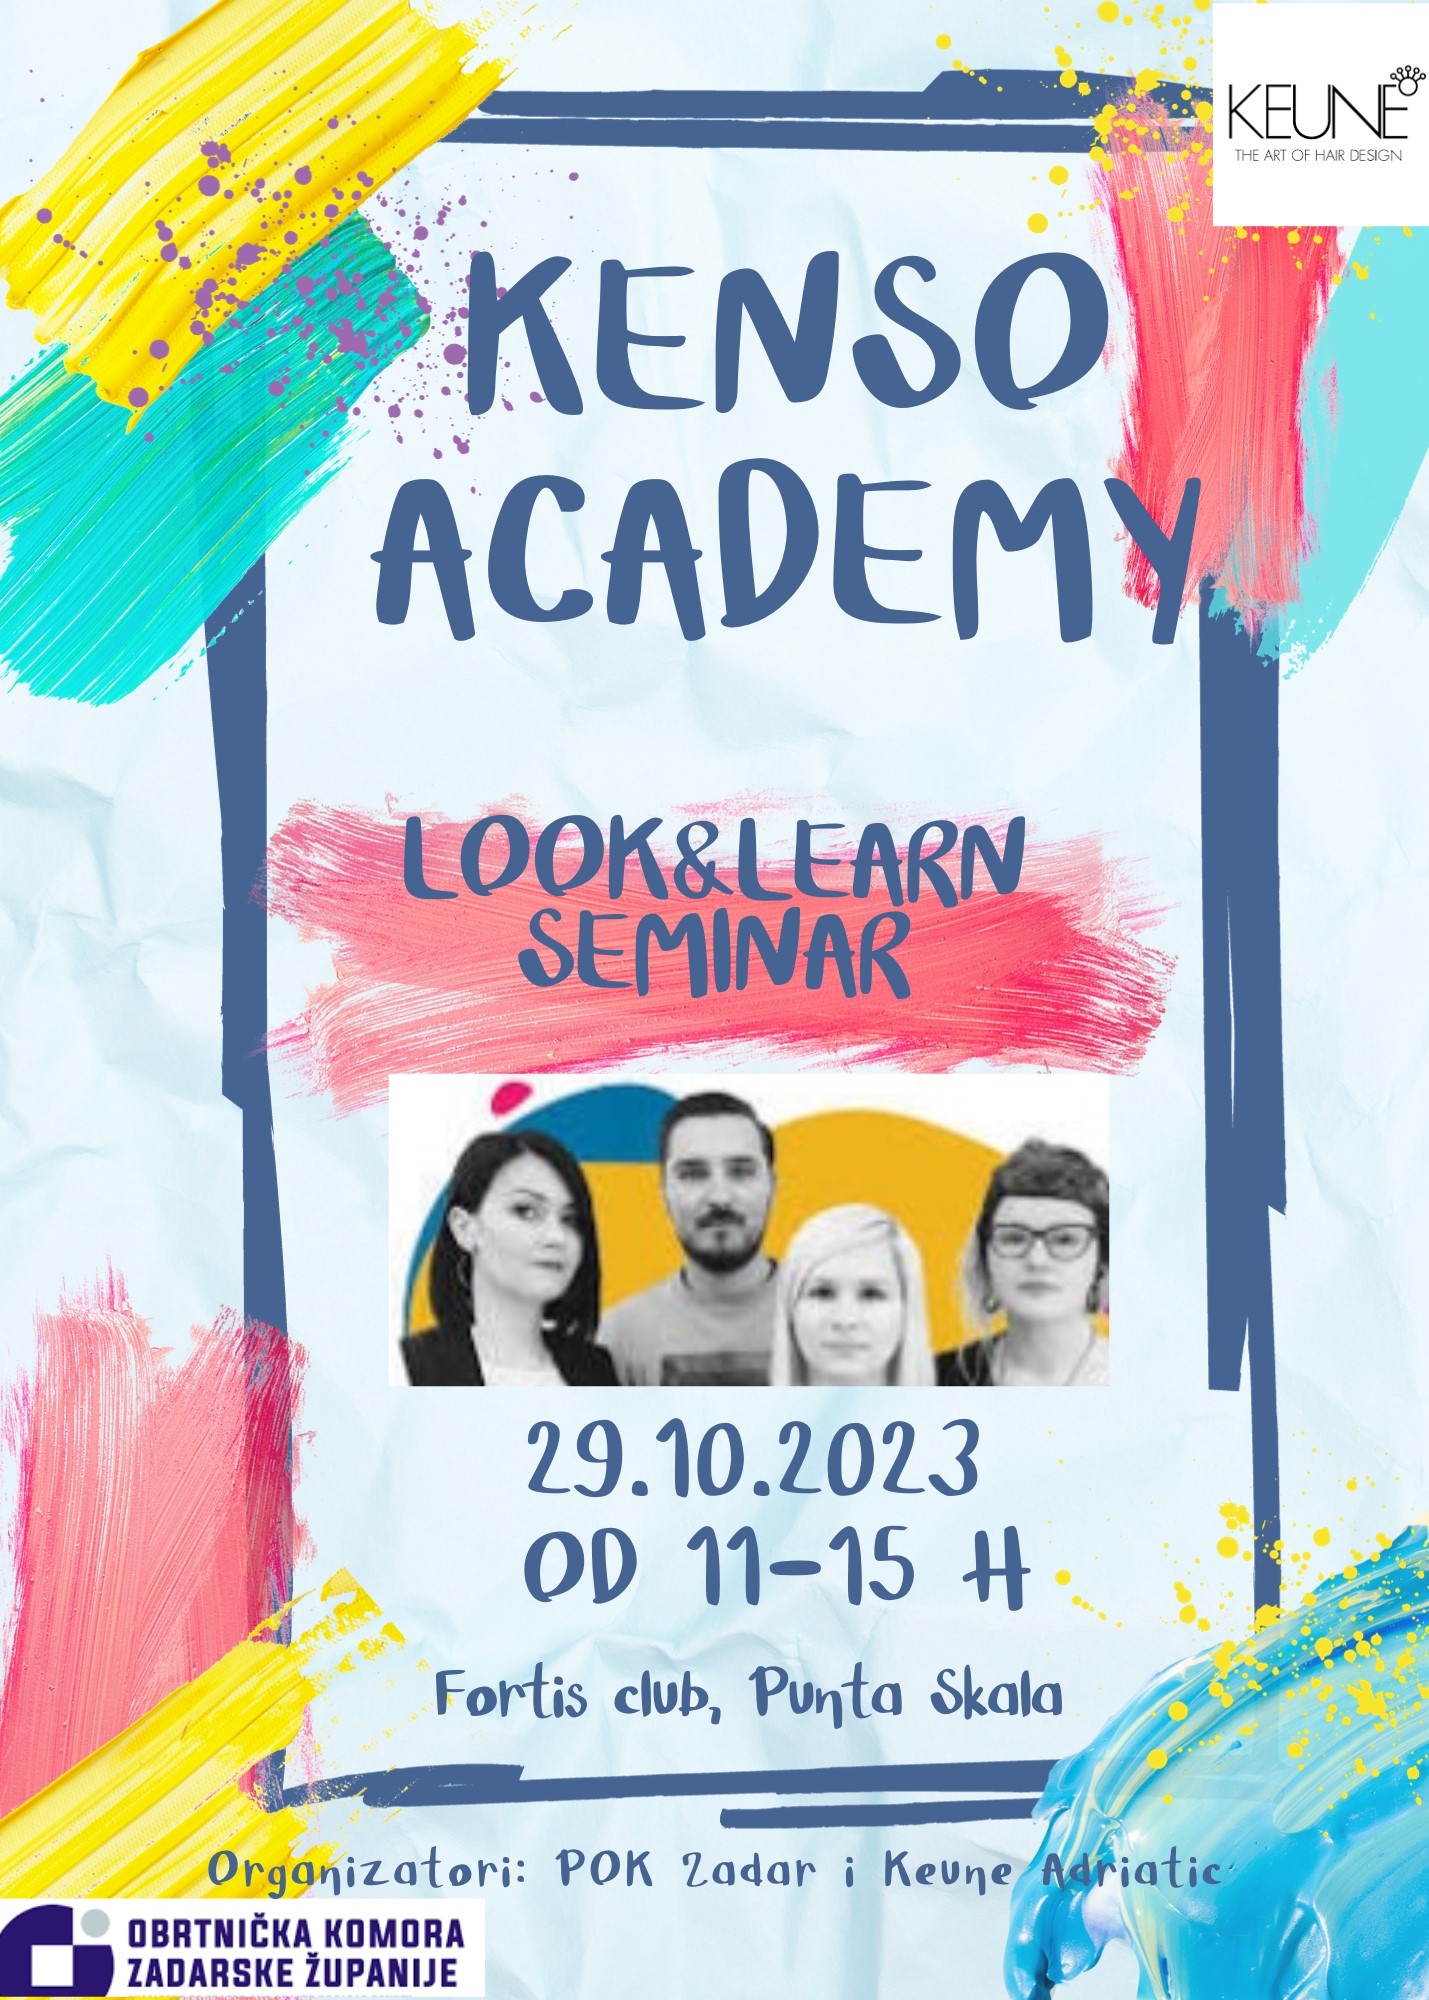 Najava održavanja Kanso Academy Look & Learn seminara